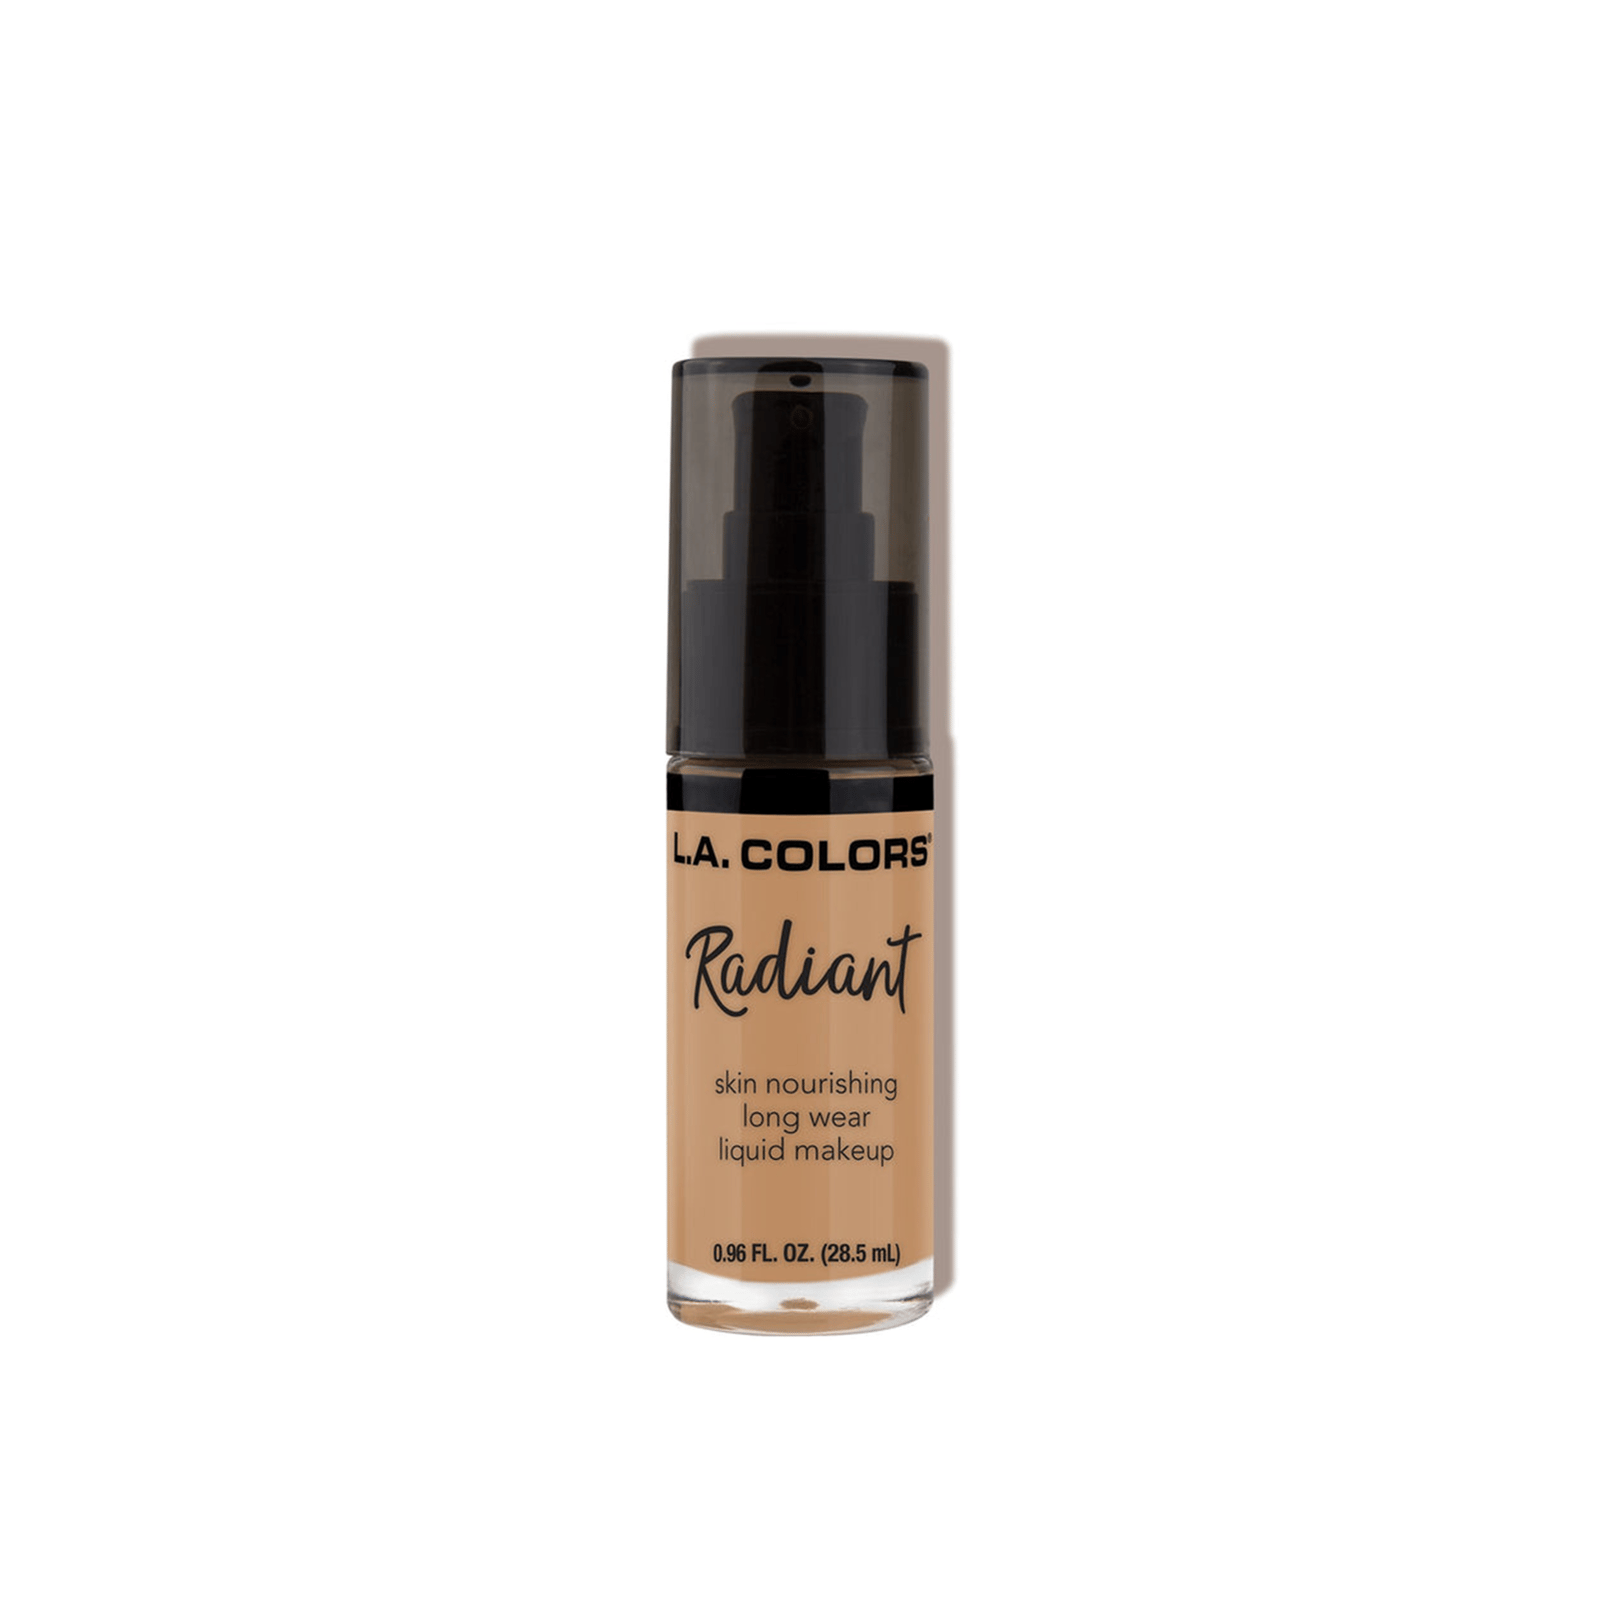 L.A. Colors Radiant Liquid Makeup Foundation CLM393 Light Toffee 28.5ml